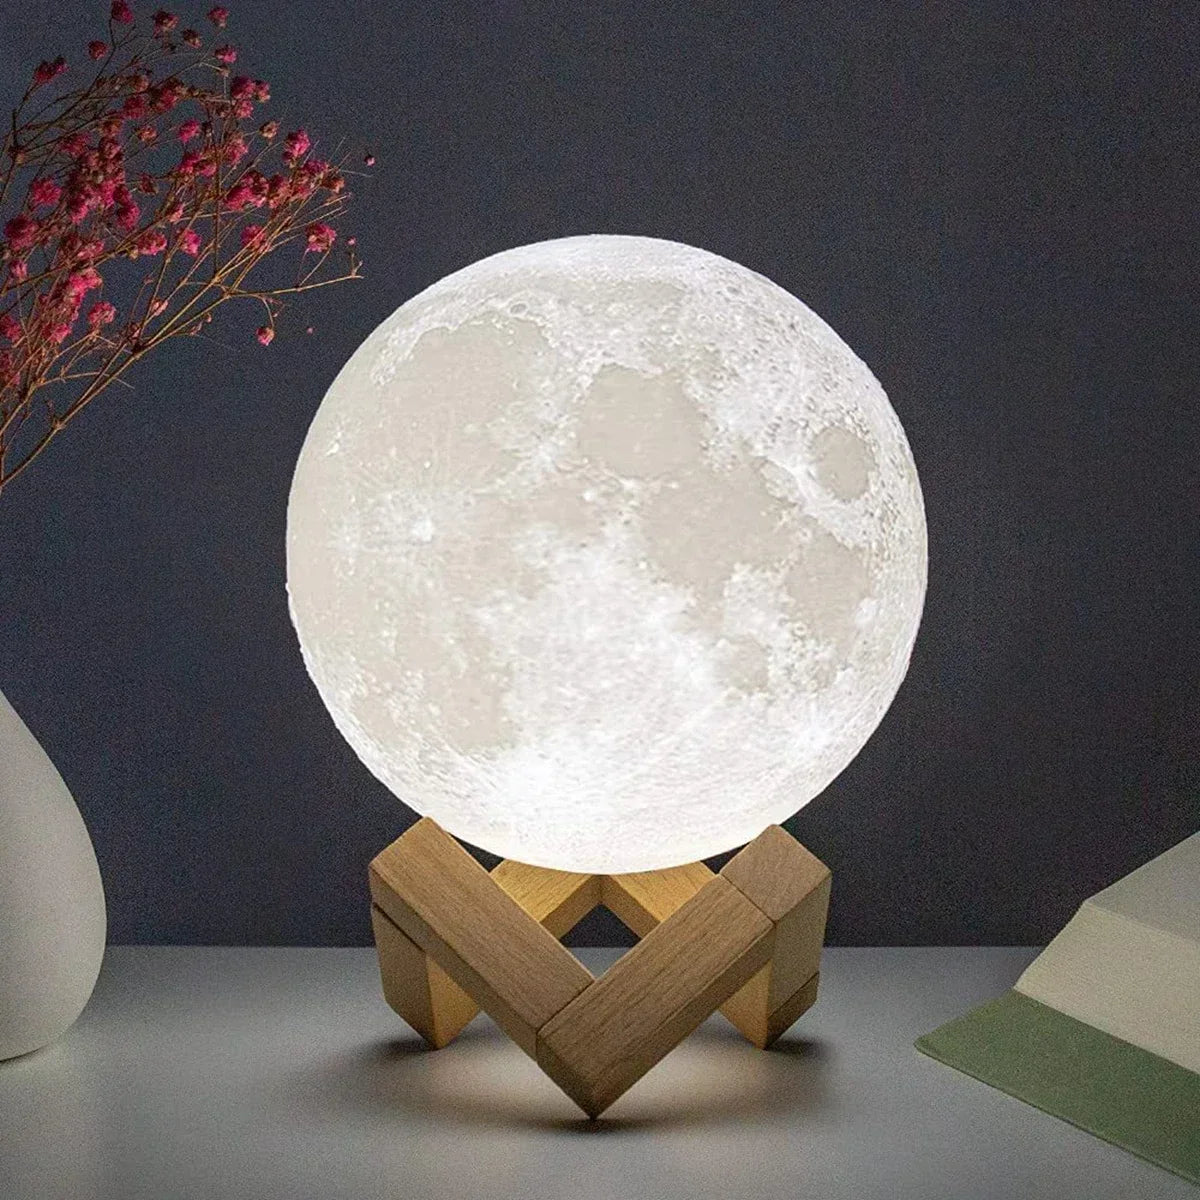 8cm Battery Powered Moon Lamp LED Night Light